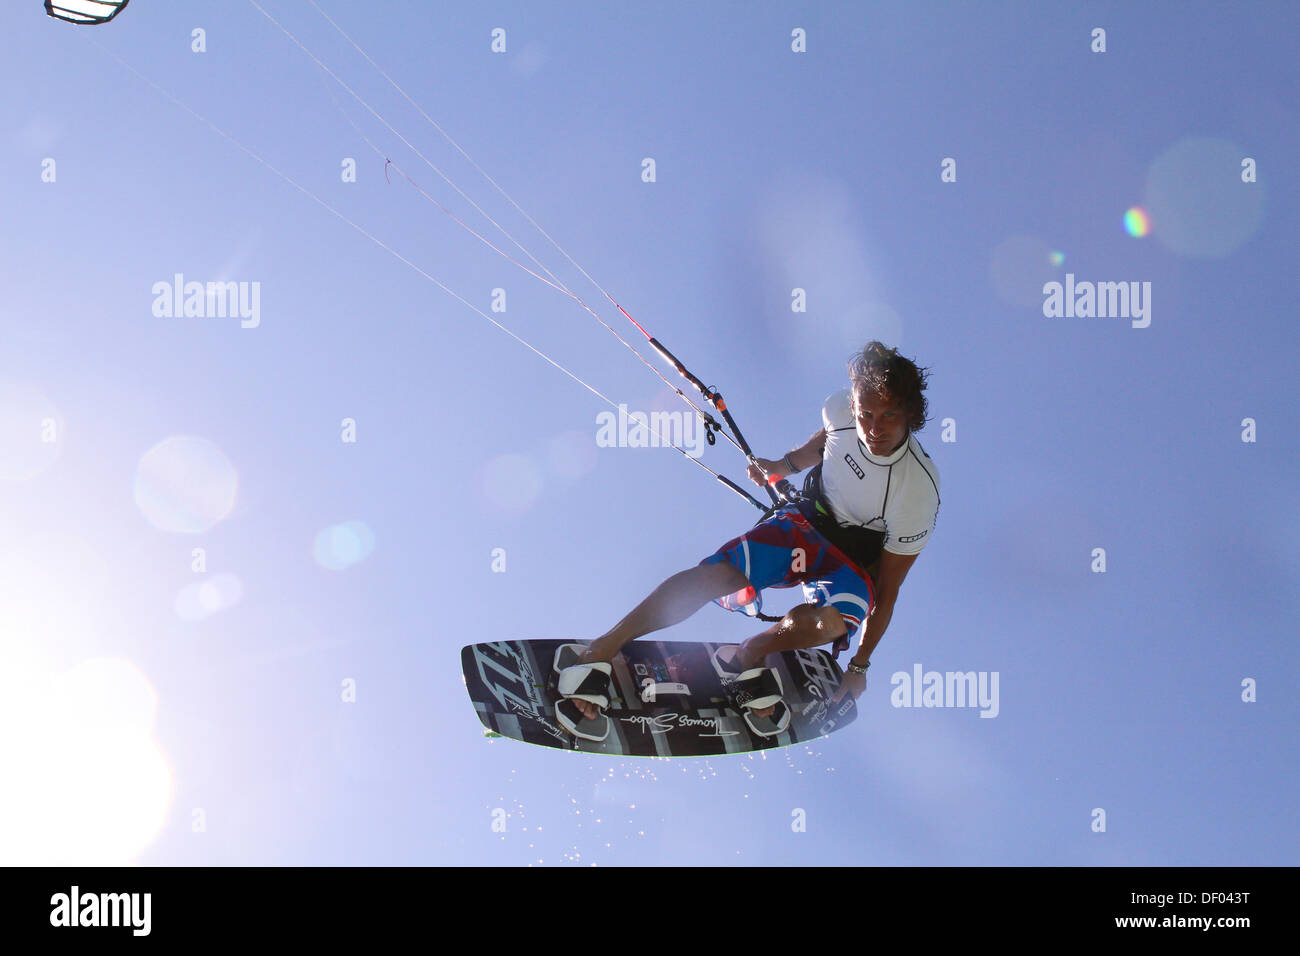 Kitesurfer jumping, El Gouna, Red Sea Governorate, Egypt Stock Photo